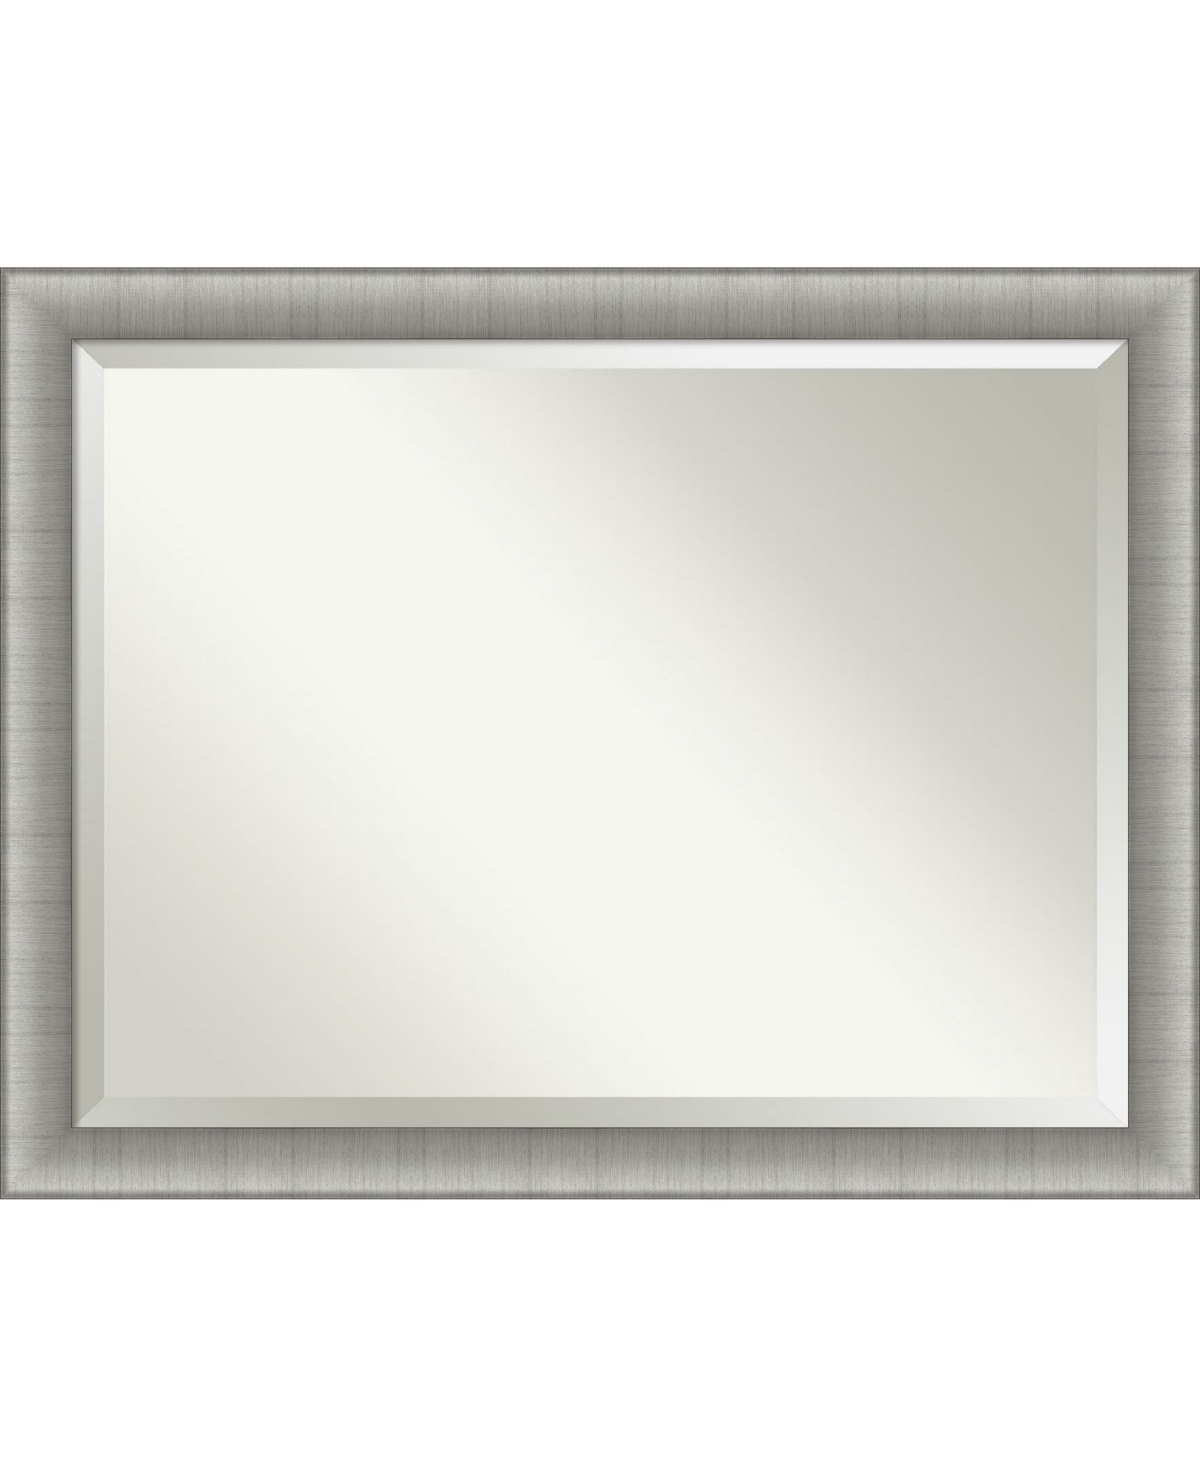 Elegant Brushed Framed Bathroom Vanity Wall Mirror, 44.75" x 34.75" - Silver